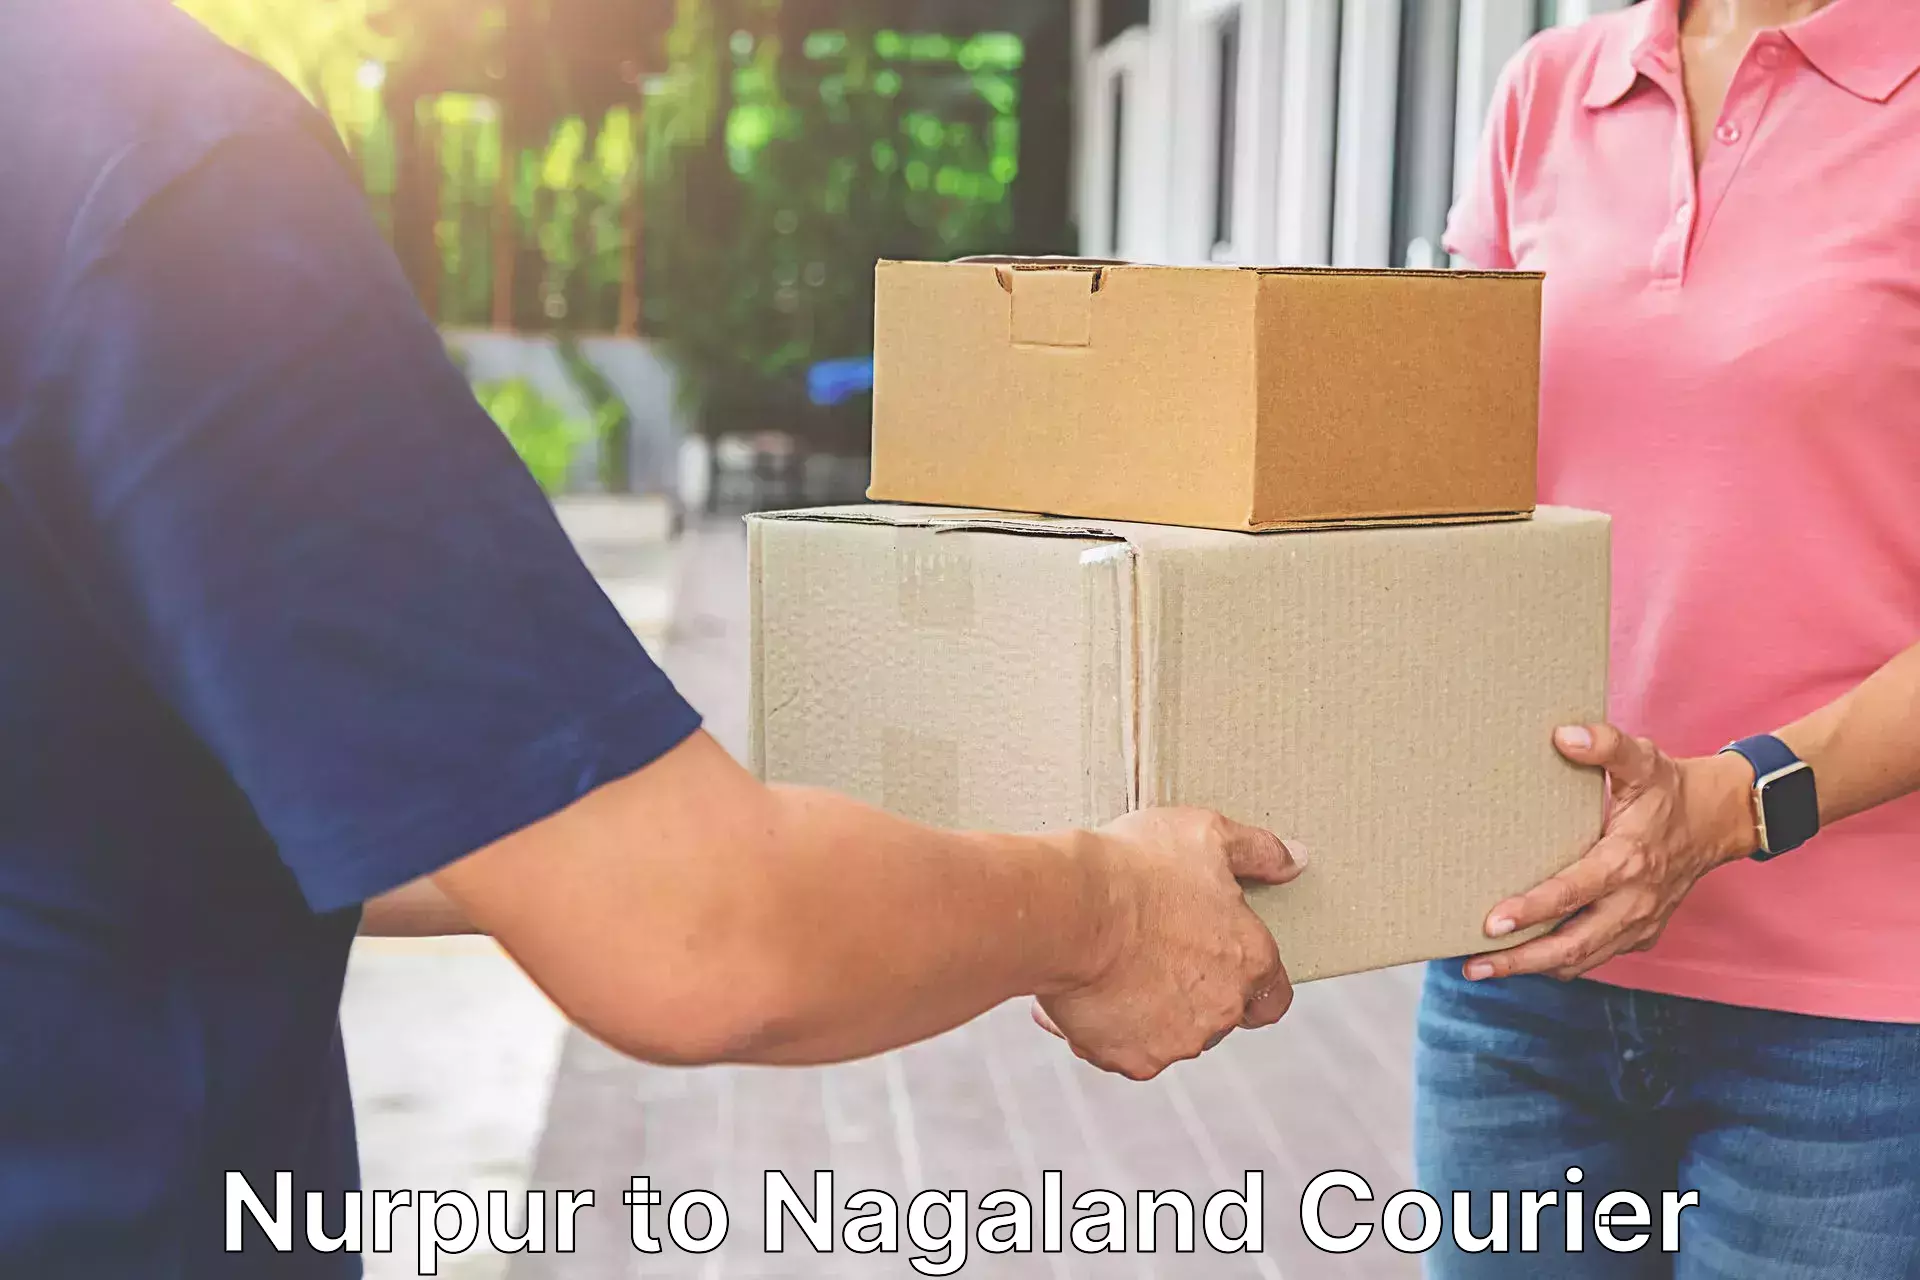 Fast delivery service Nurpur to Dimapur